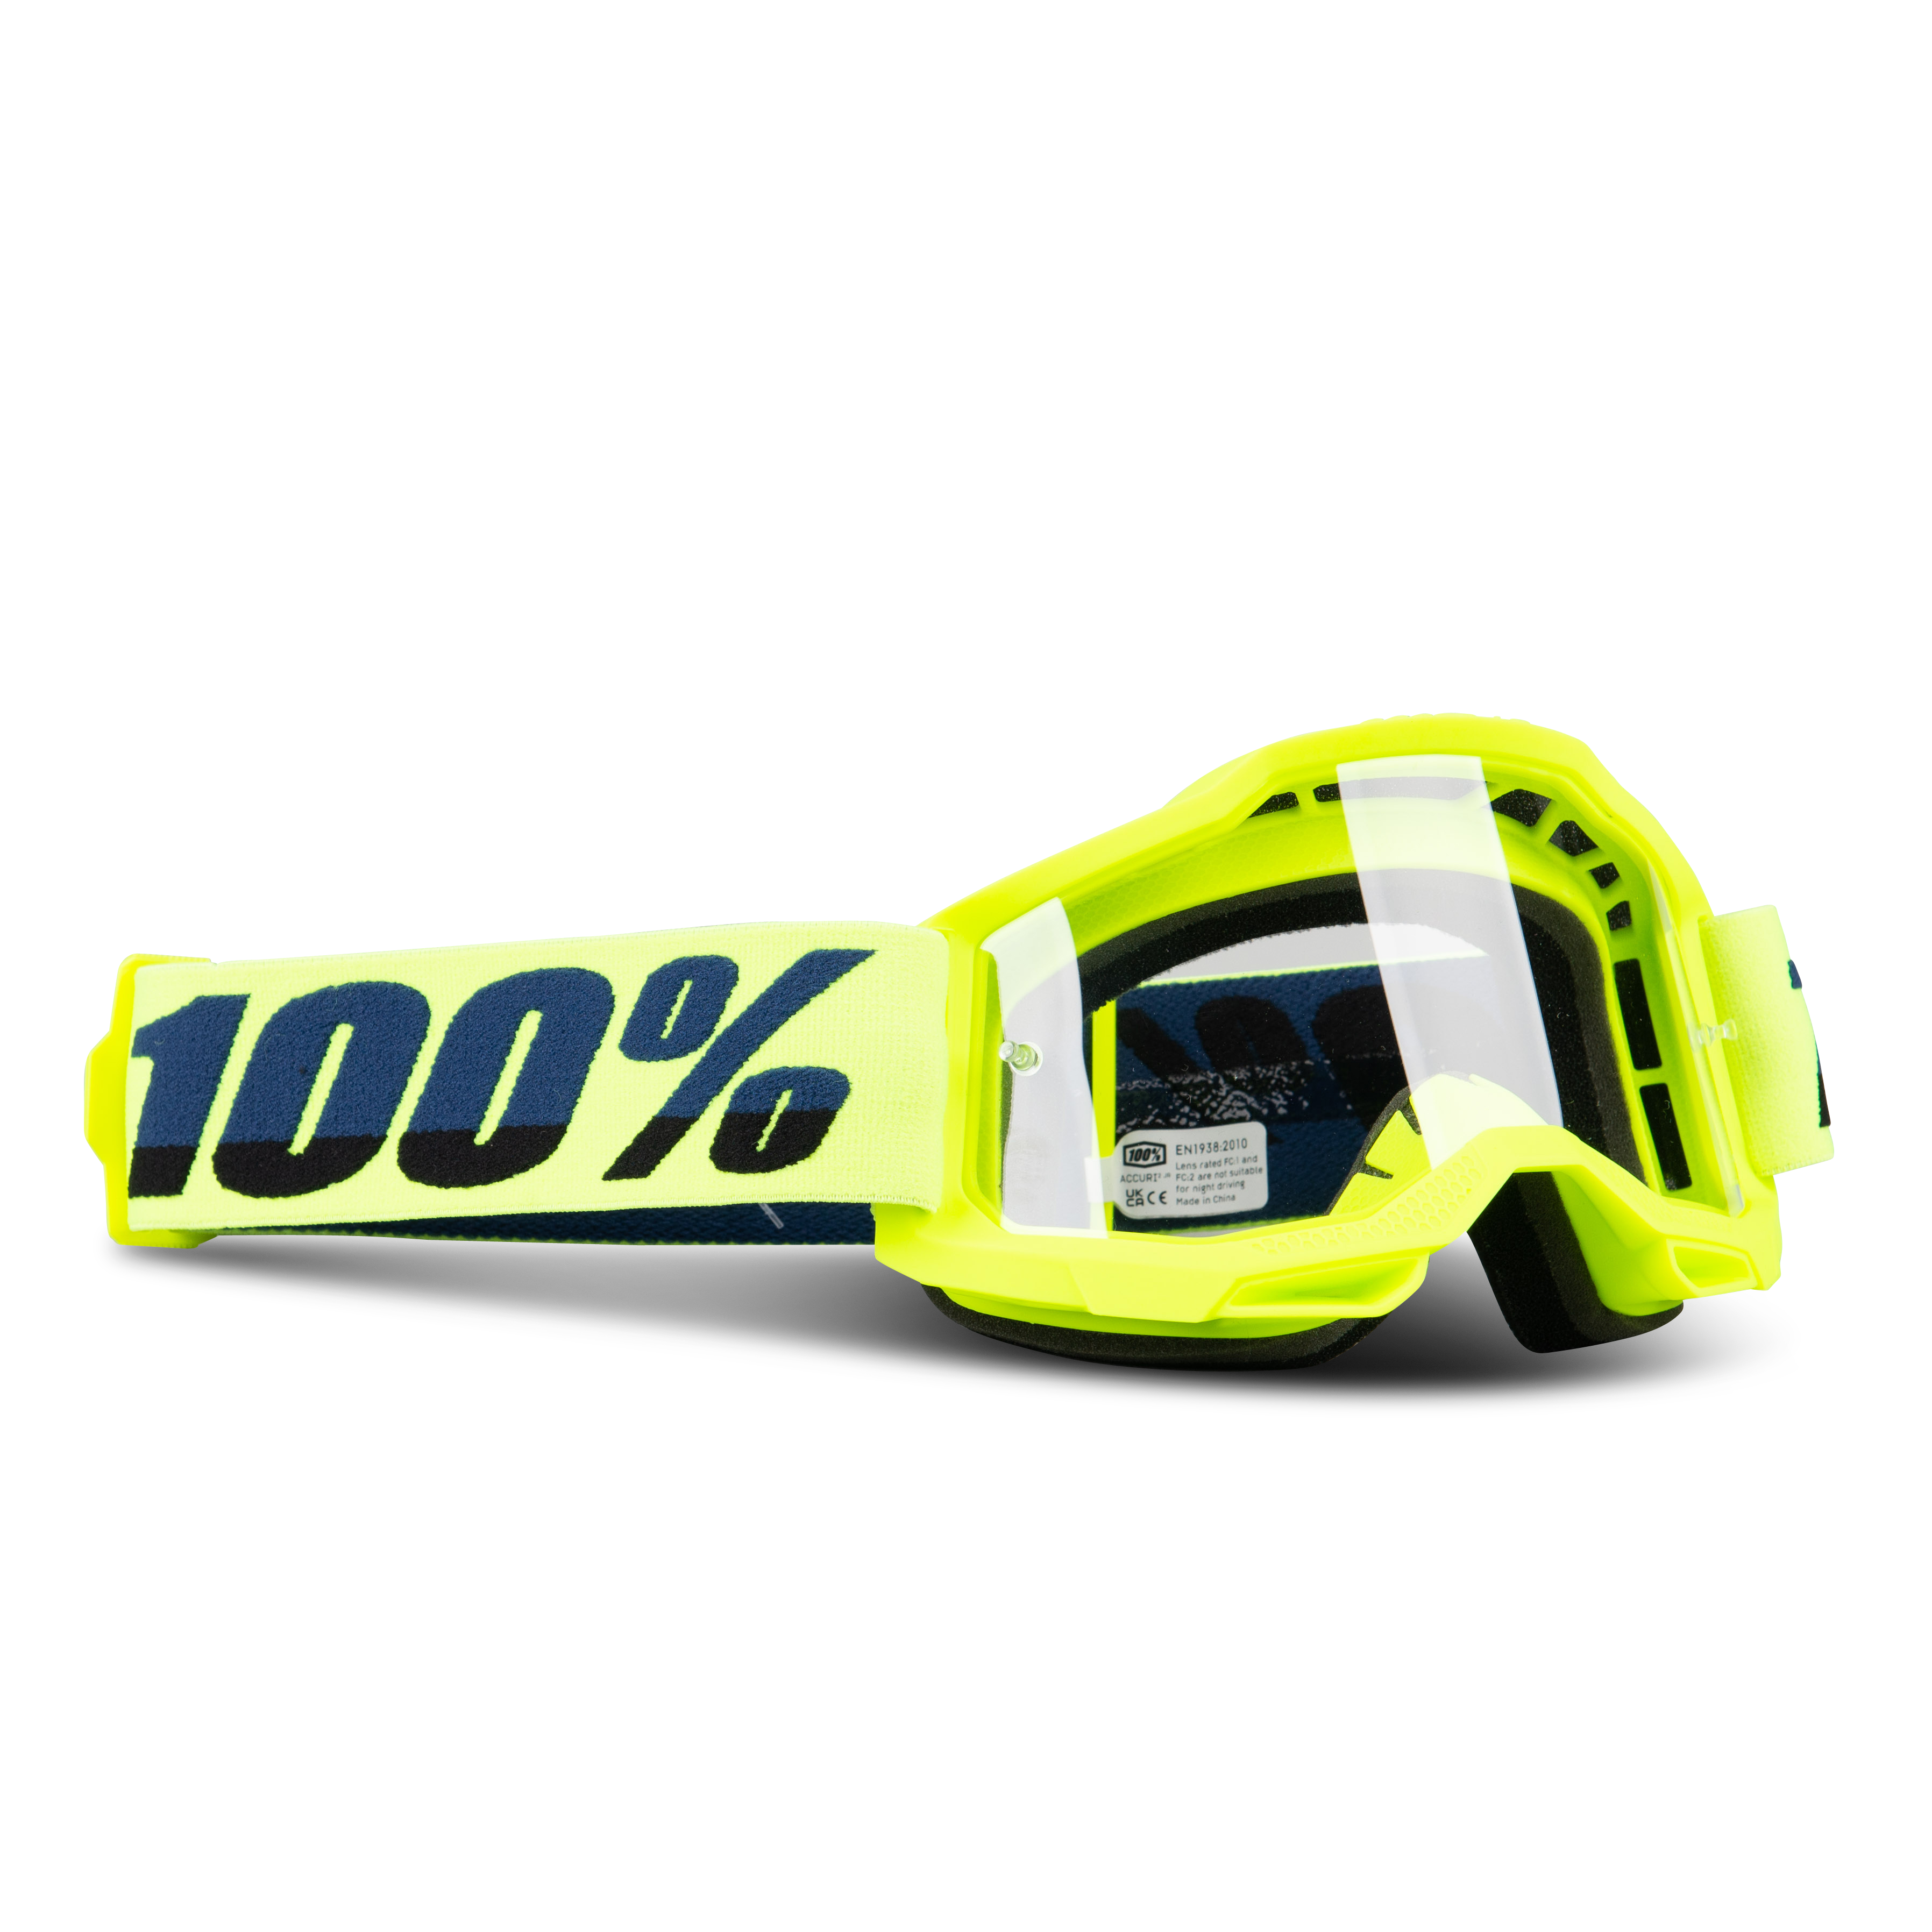 100% Accuri 2 MX Goggles Youth Yellow - Now 11% Savings